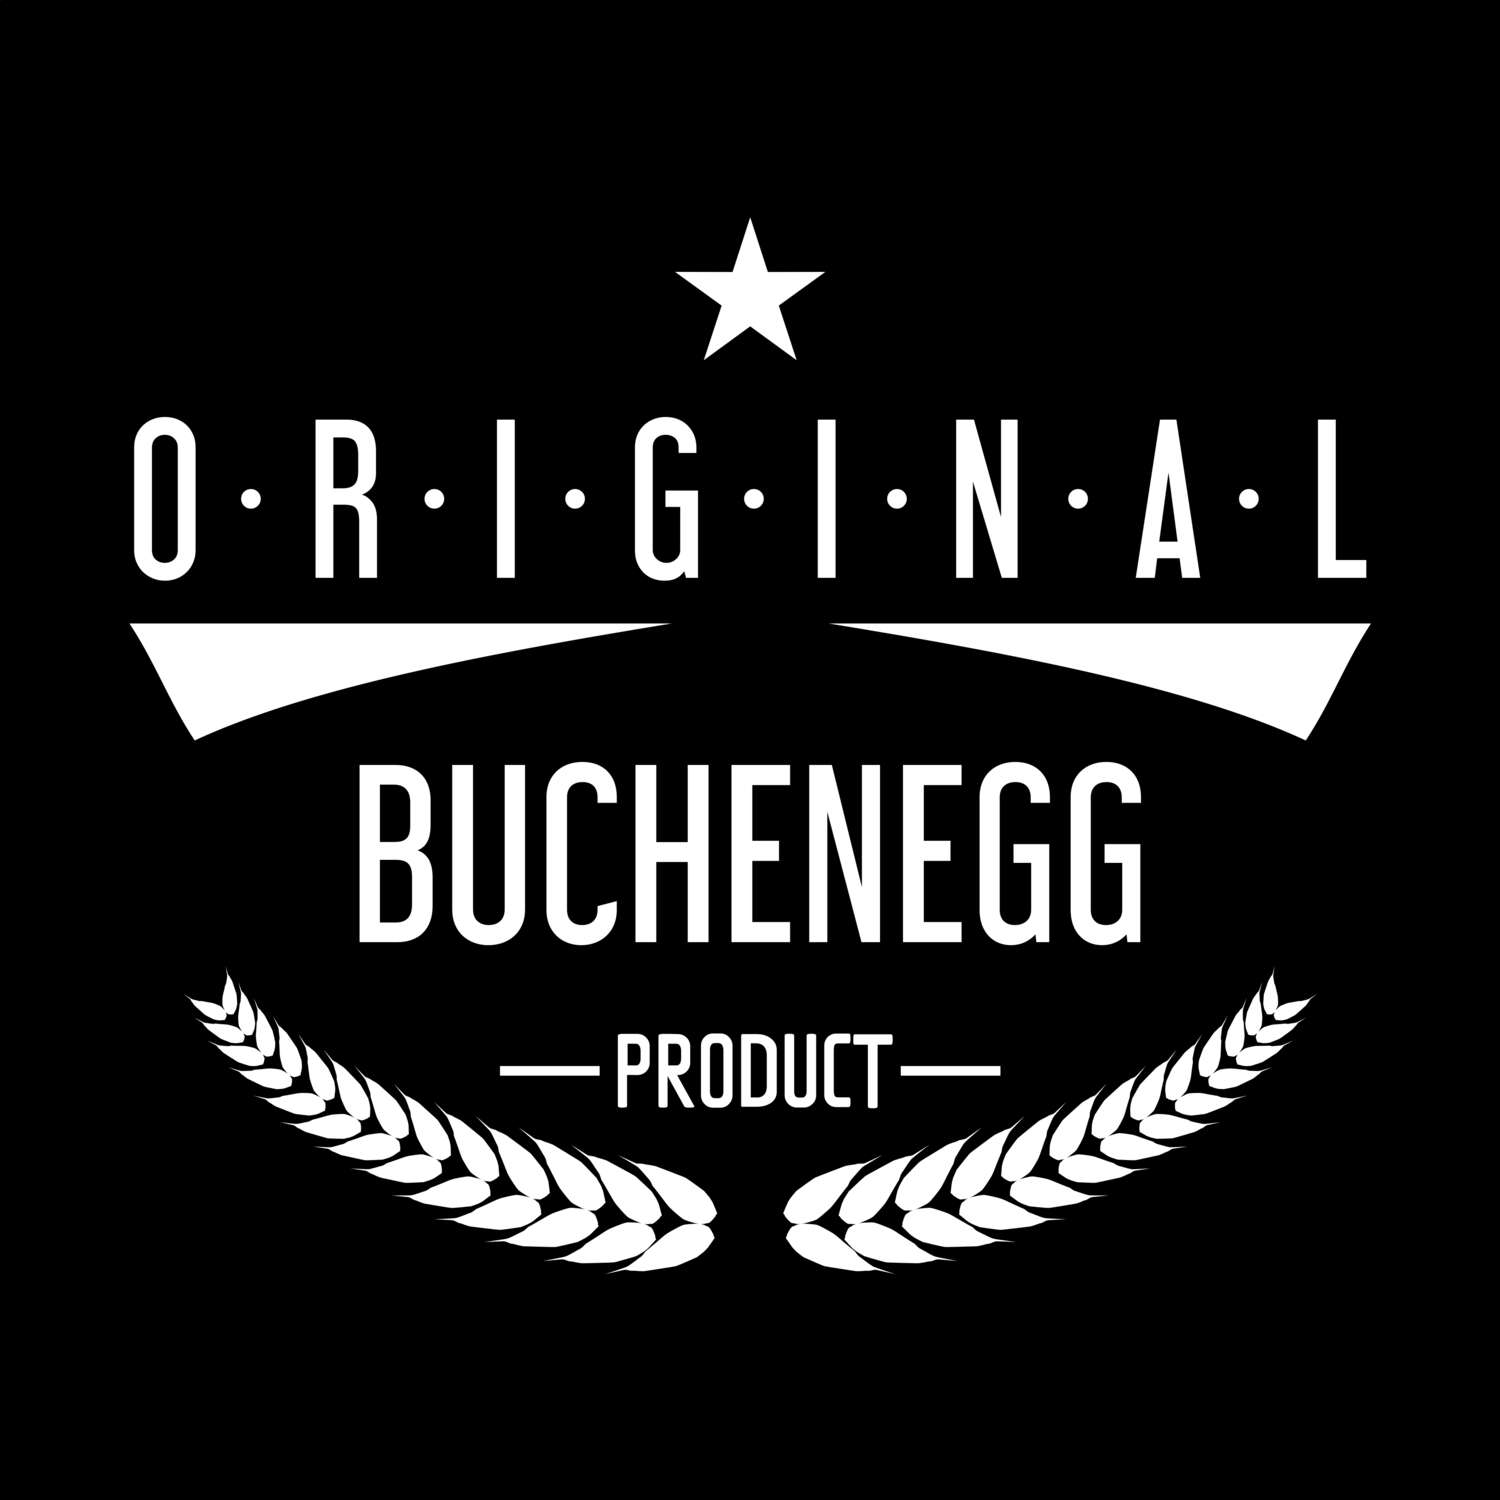 Buchenegg T-Shirt »Original Product«